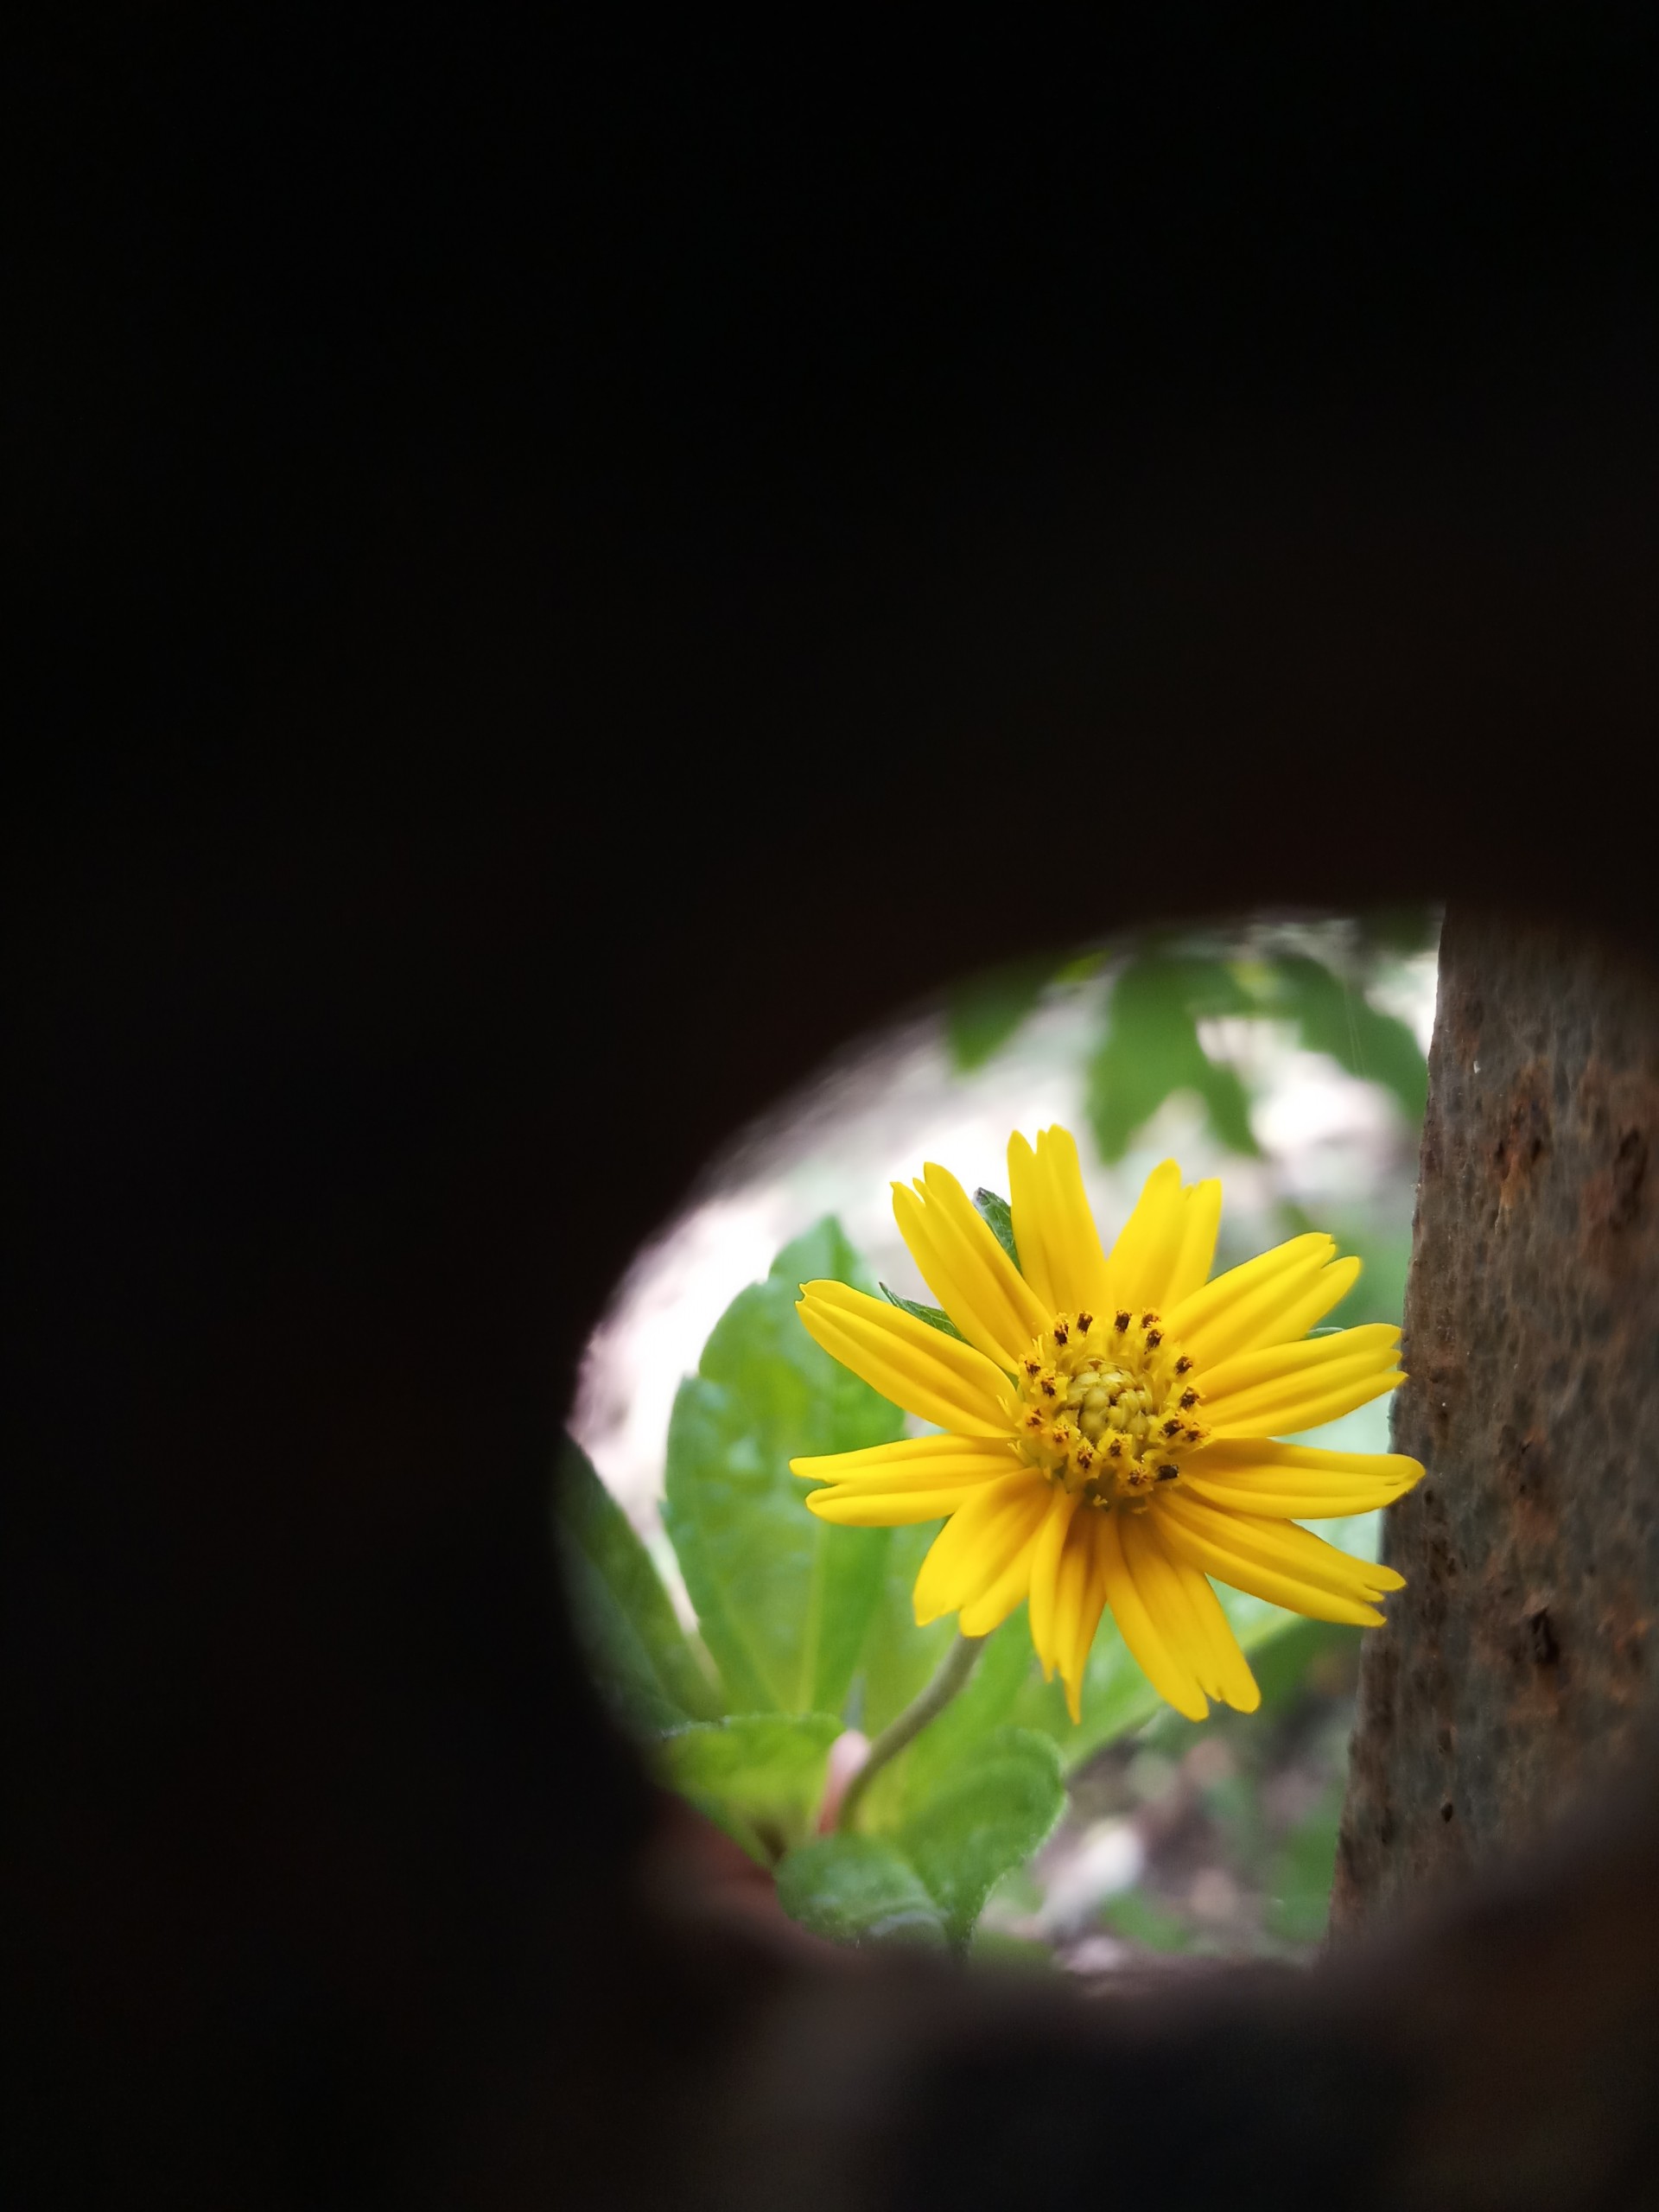 Yellow Flower in focus